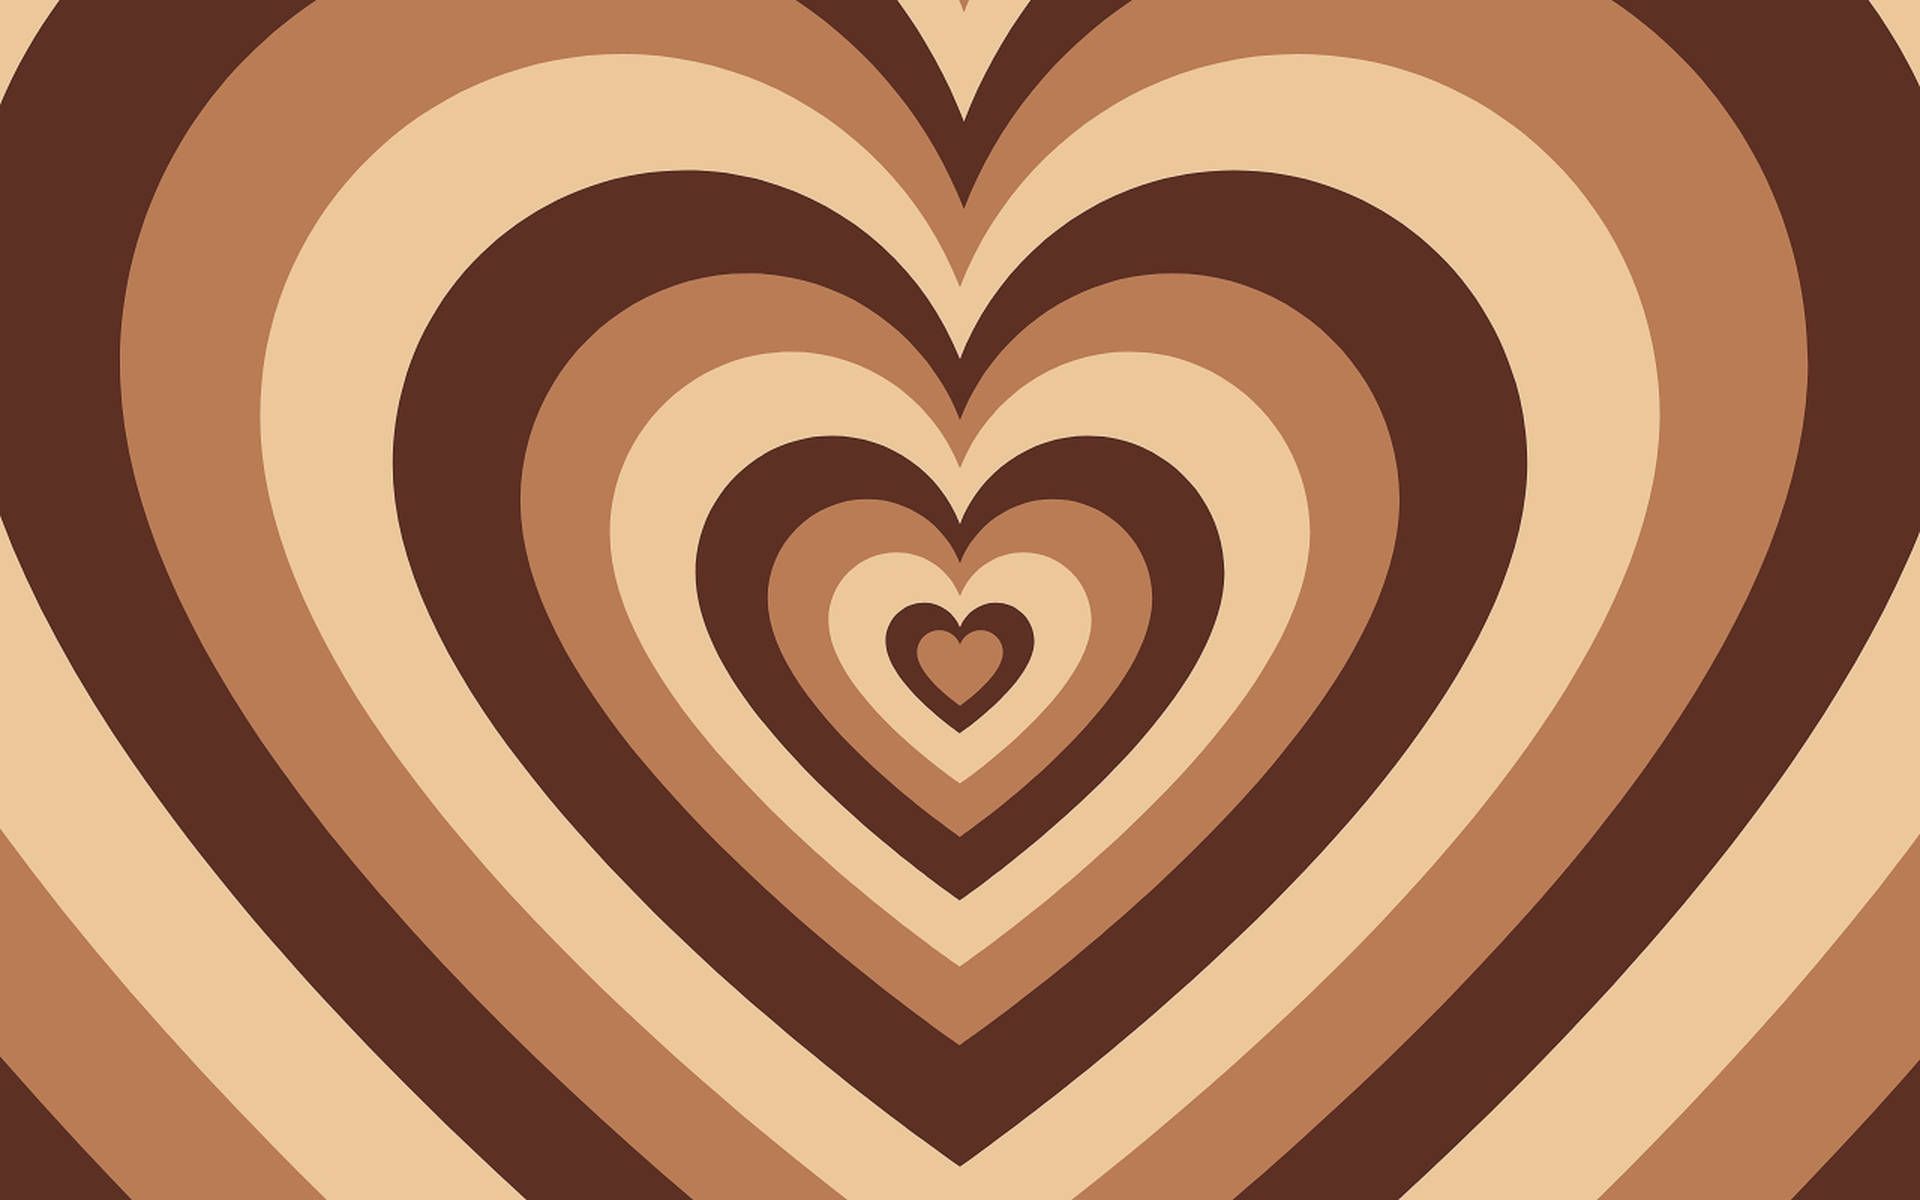 Free Brown Heart Wallpaper Downloads, Brown Heart Wallpaper for FREE